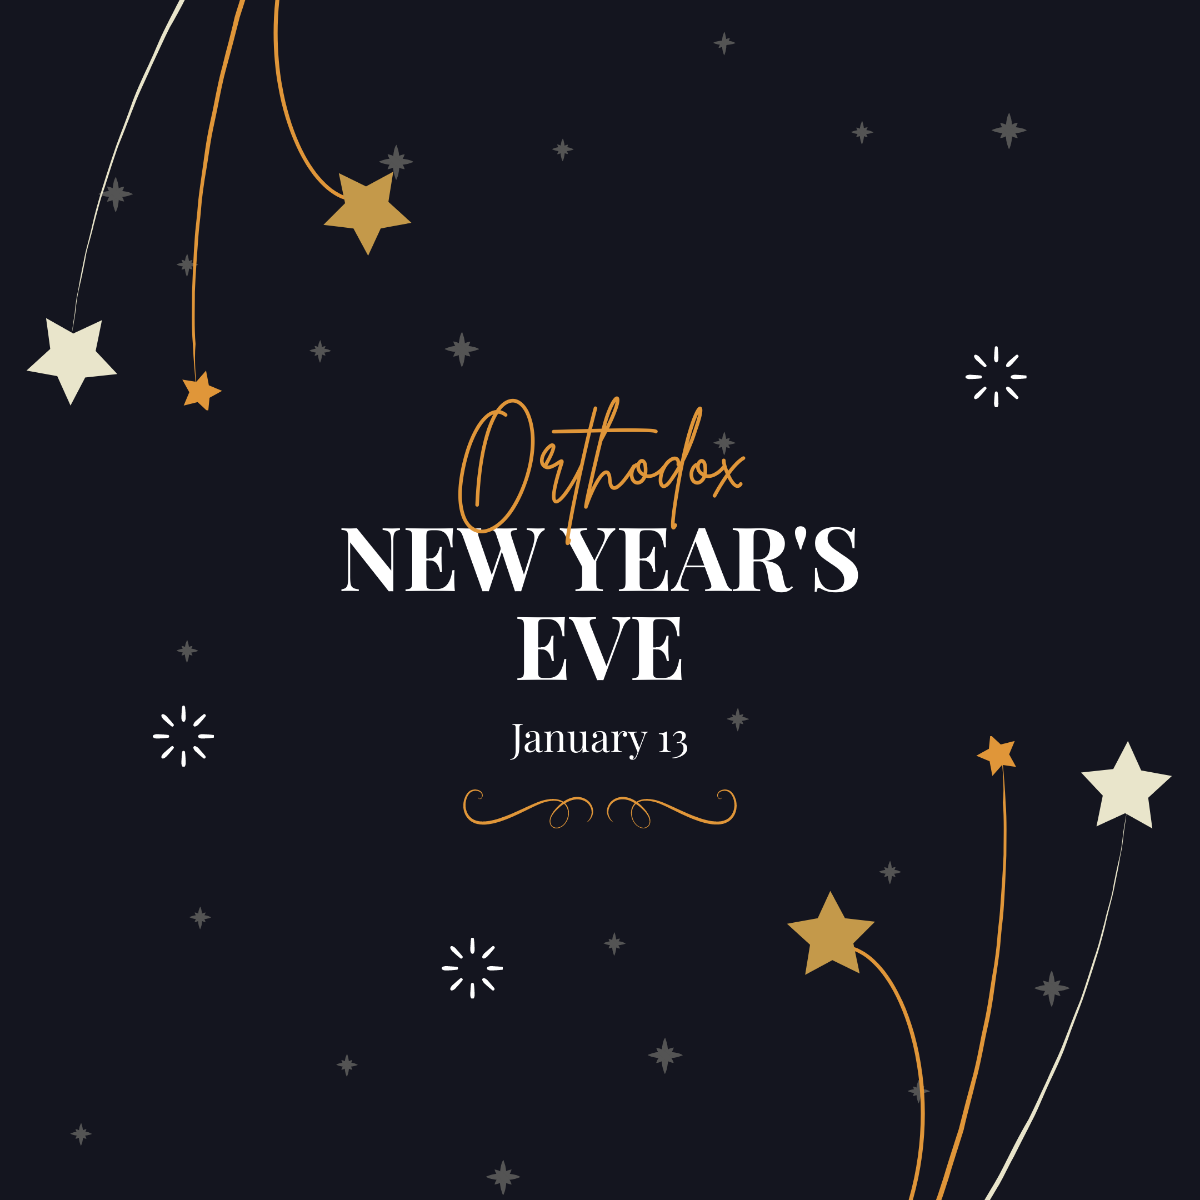 Orthodox New Year Eve Instagram Post